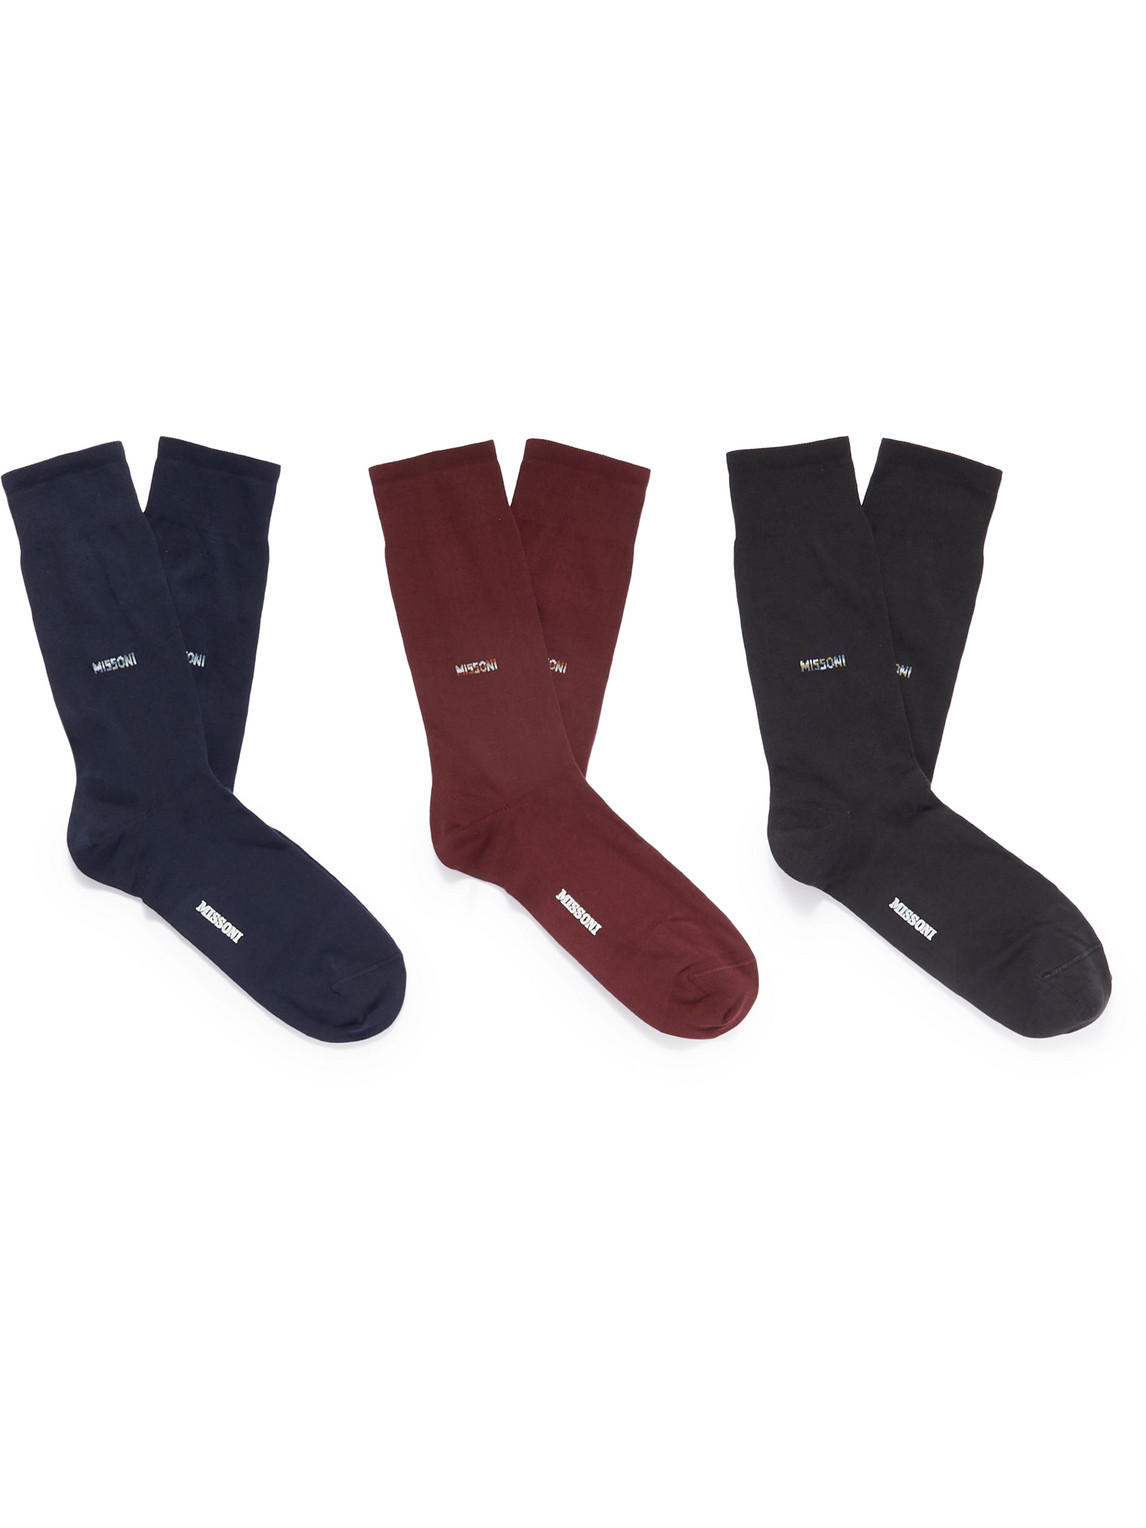 Missoni - Three-Pack Cotton-Blend Socks - Men - Multi - 44-45 von Missoni